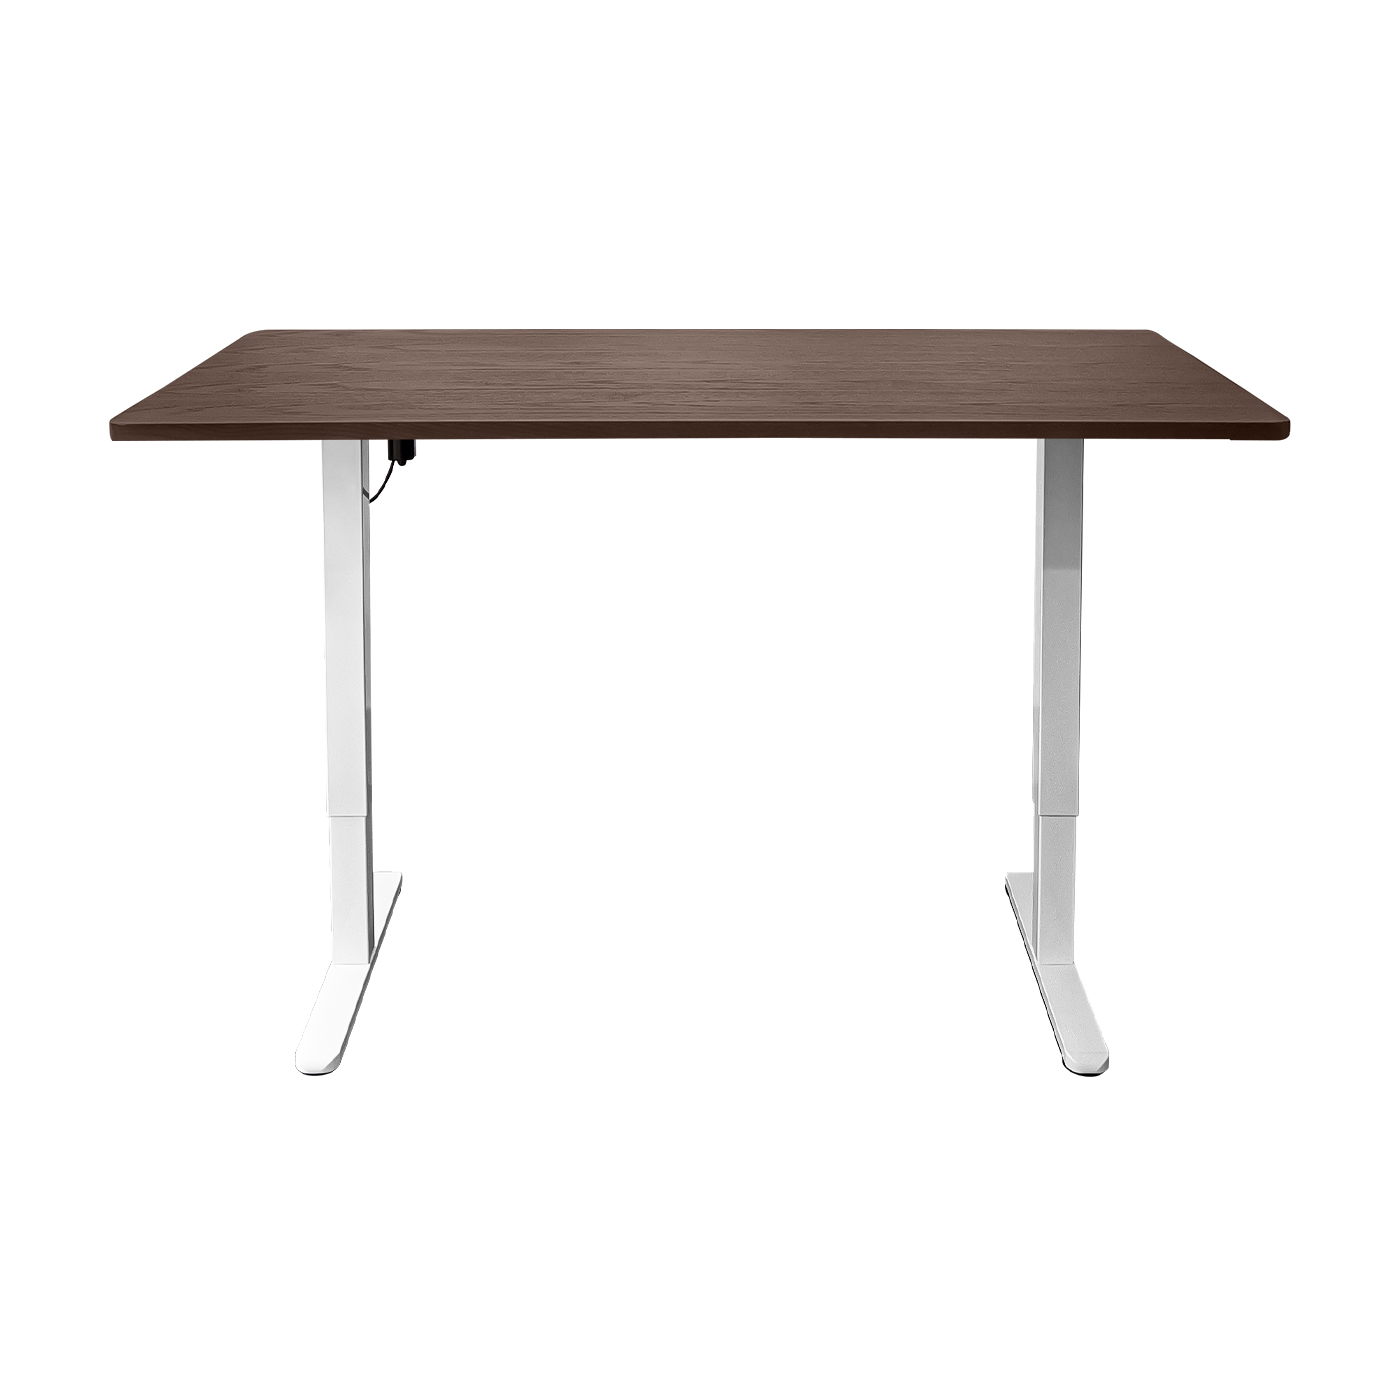 Ergo Height Adjustable Table